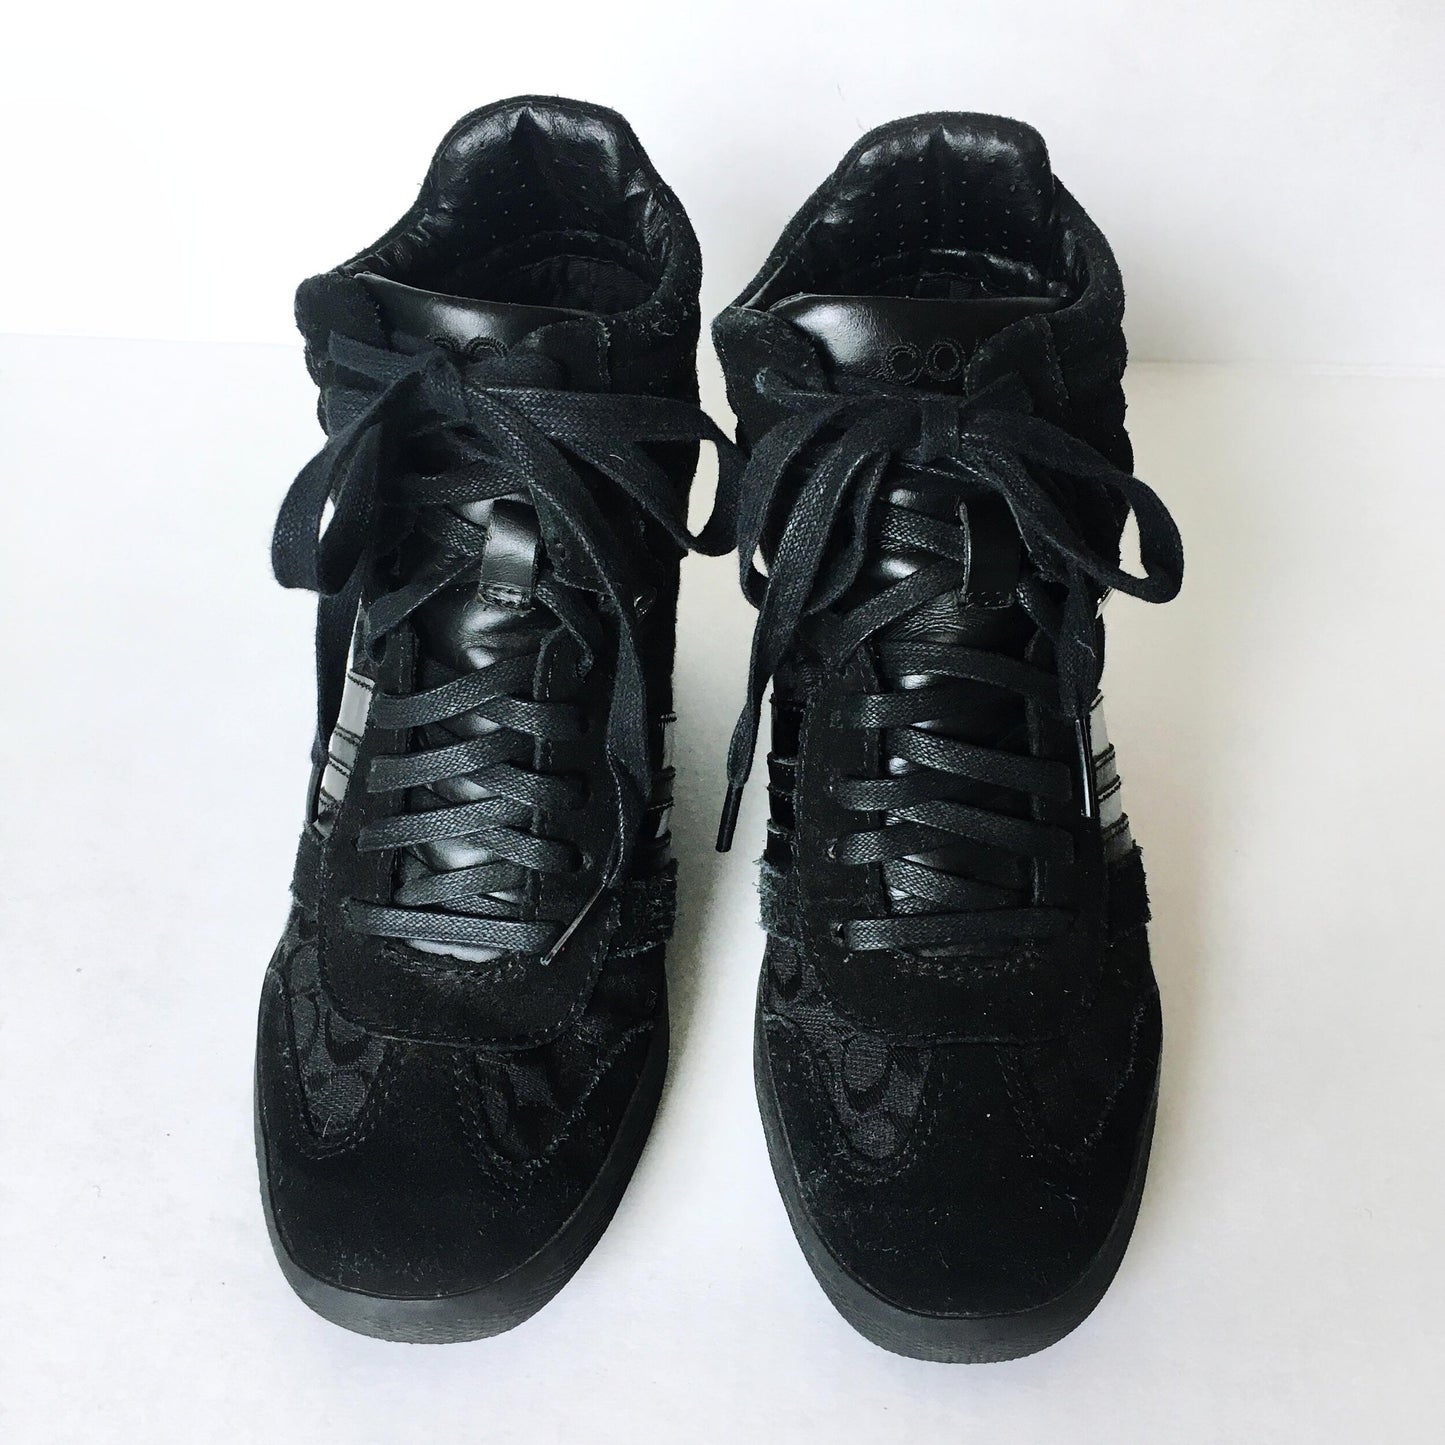 Coach Alara Suede Wedge Sneaker - size 6.5